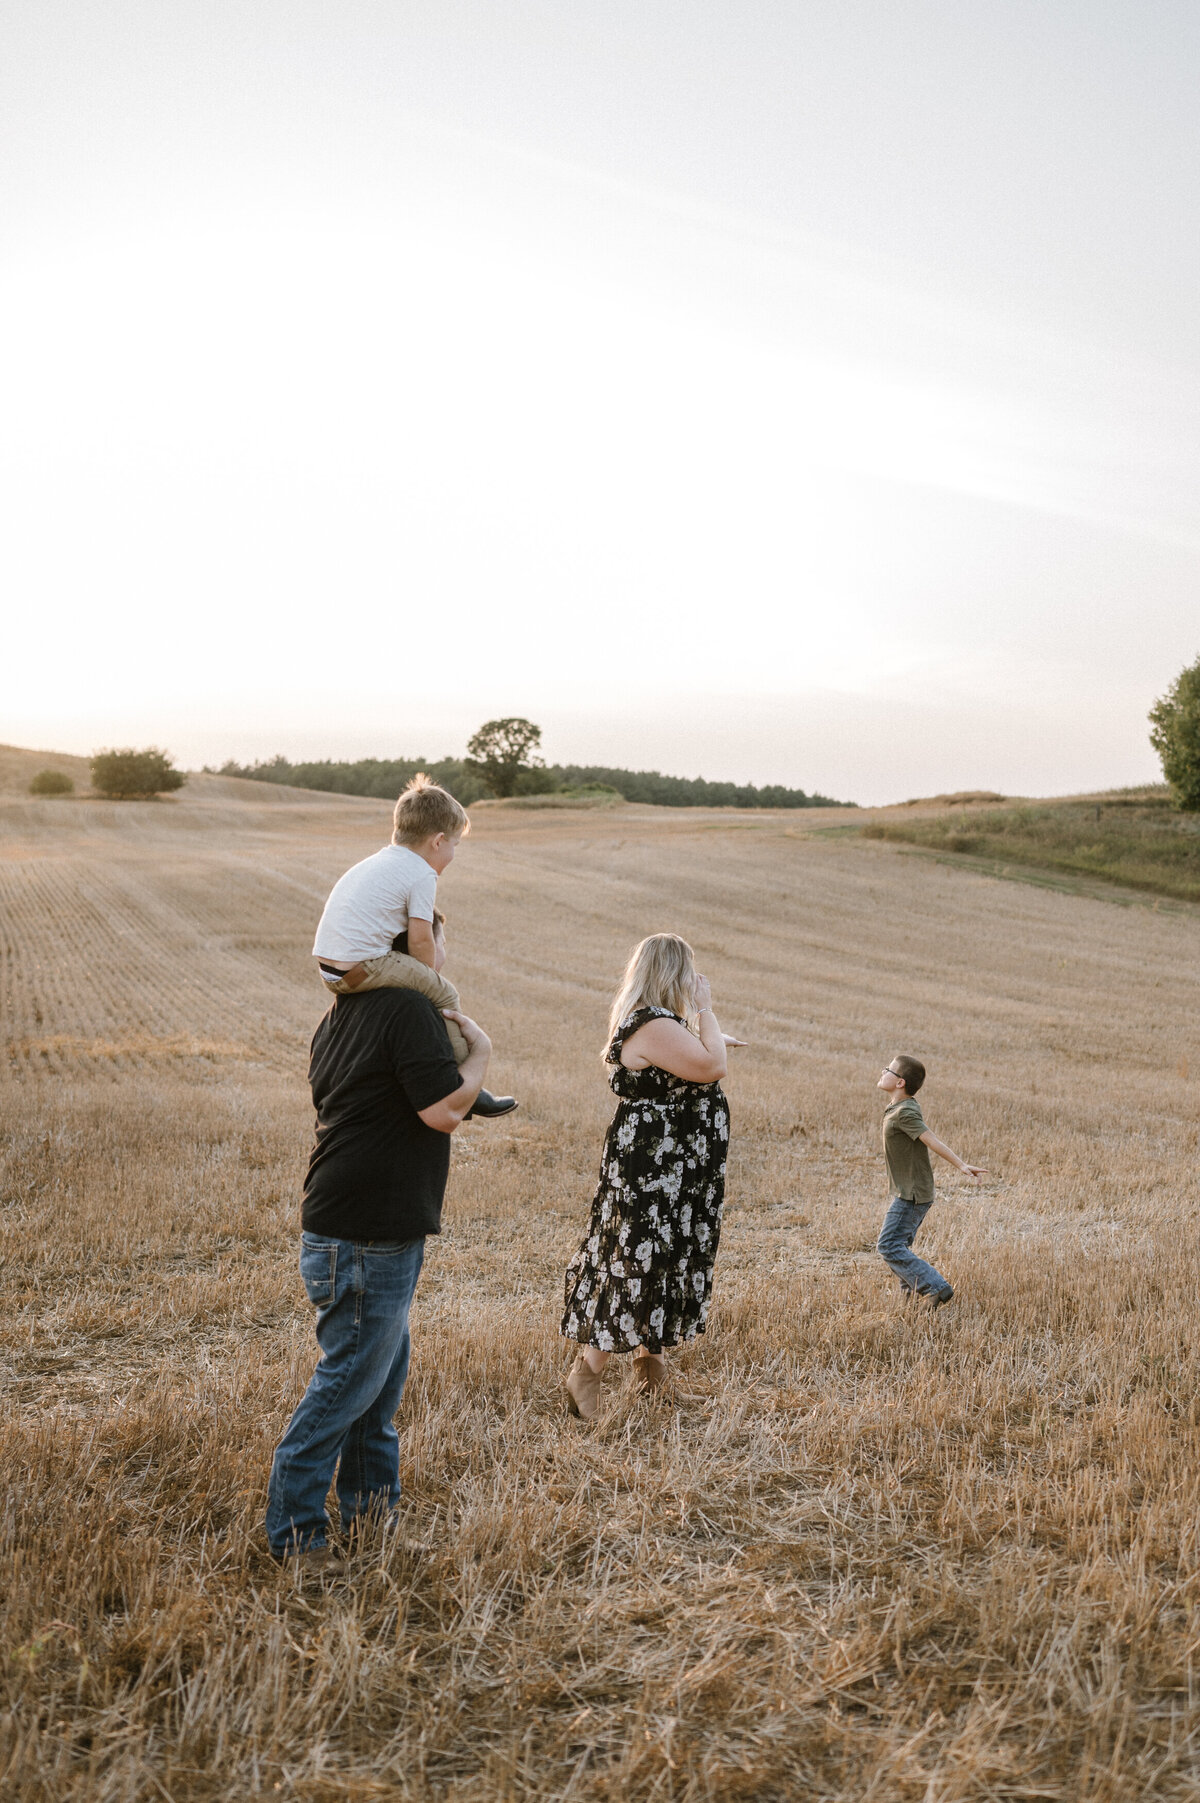 Family in a wheat field